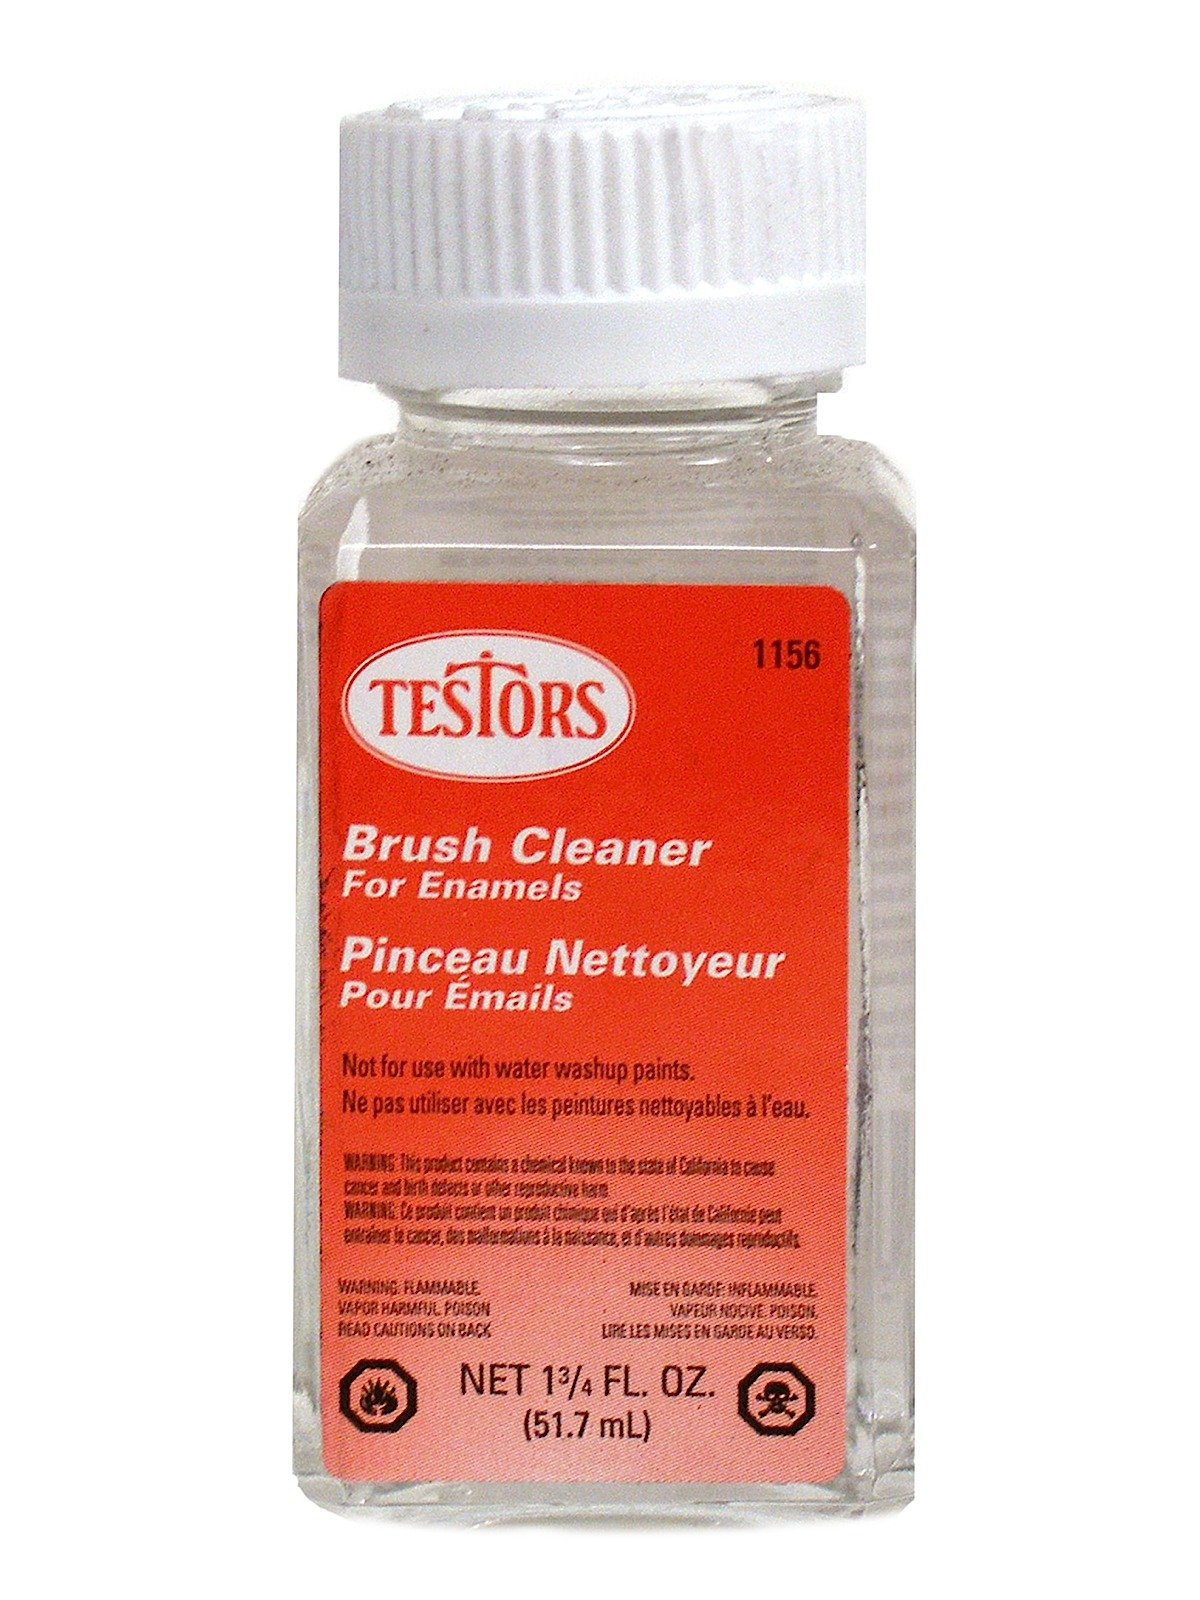 Testors - Brush Cleaner for Enamels